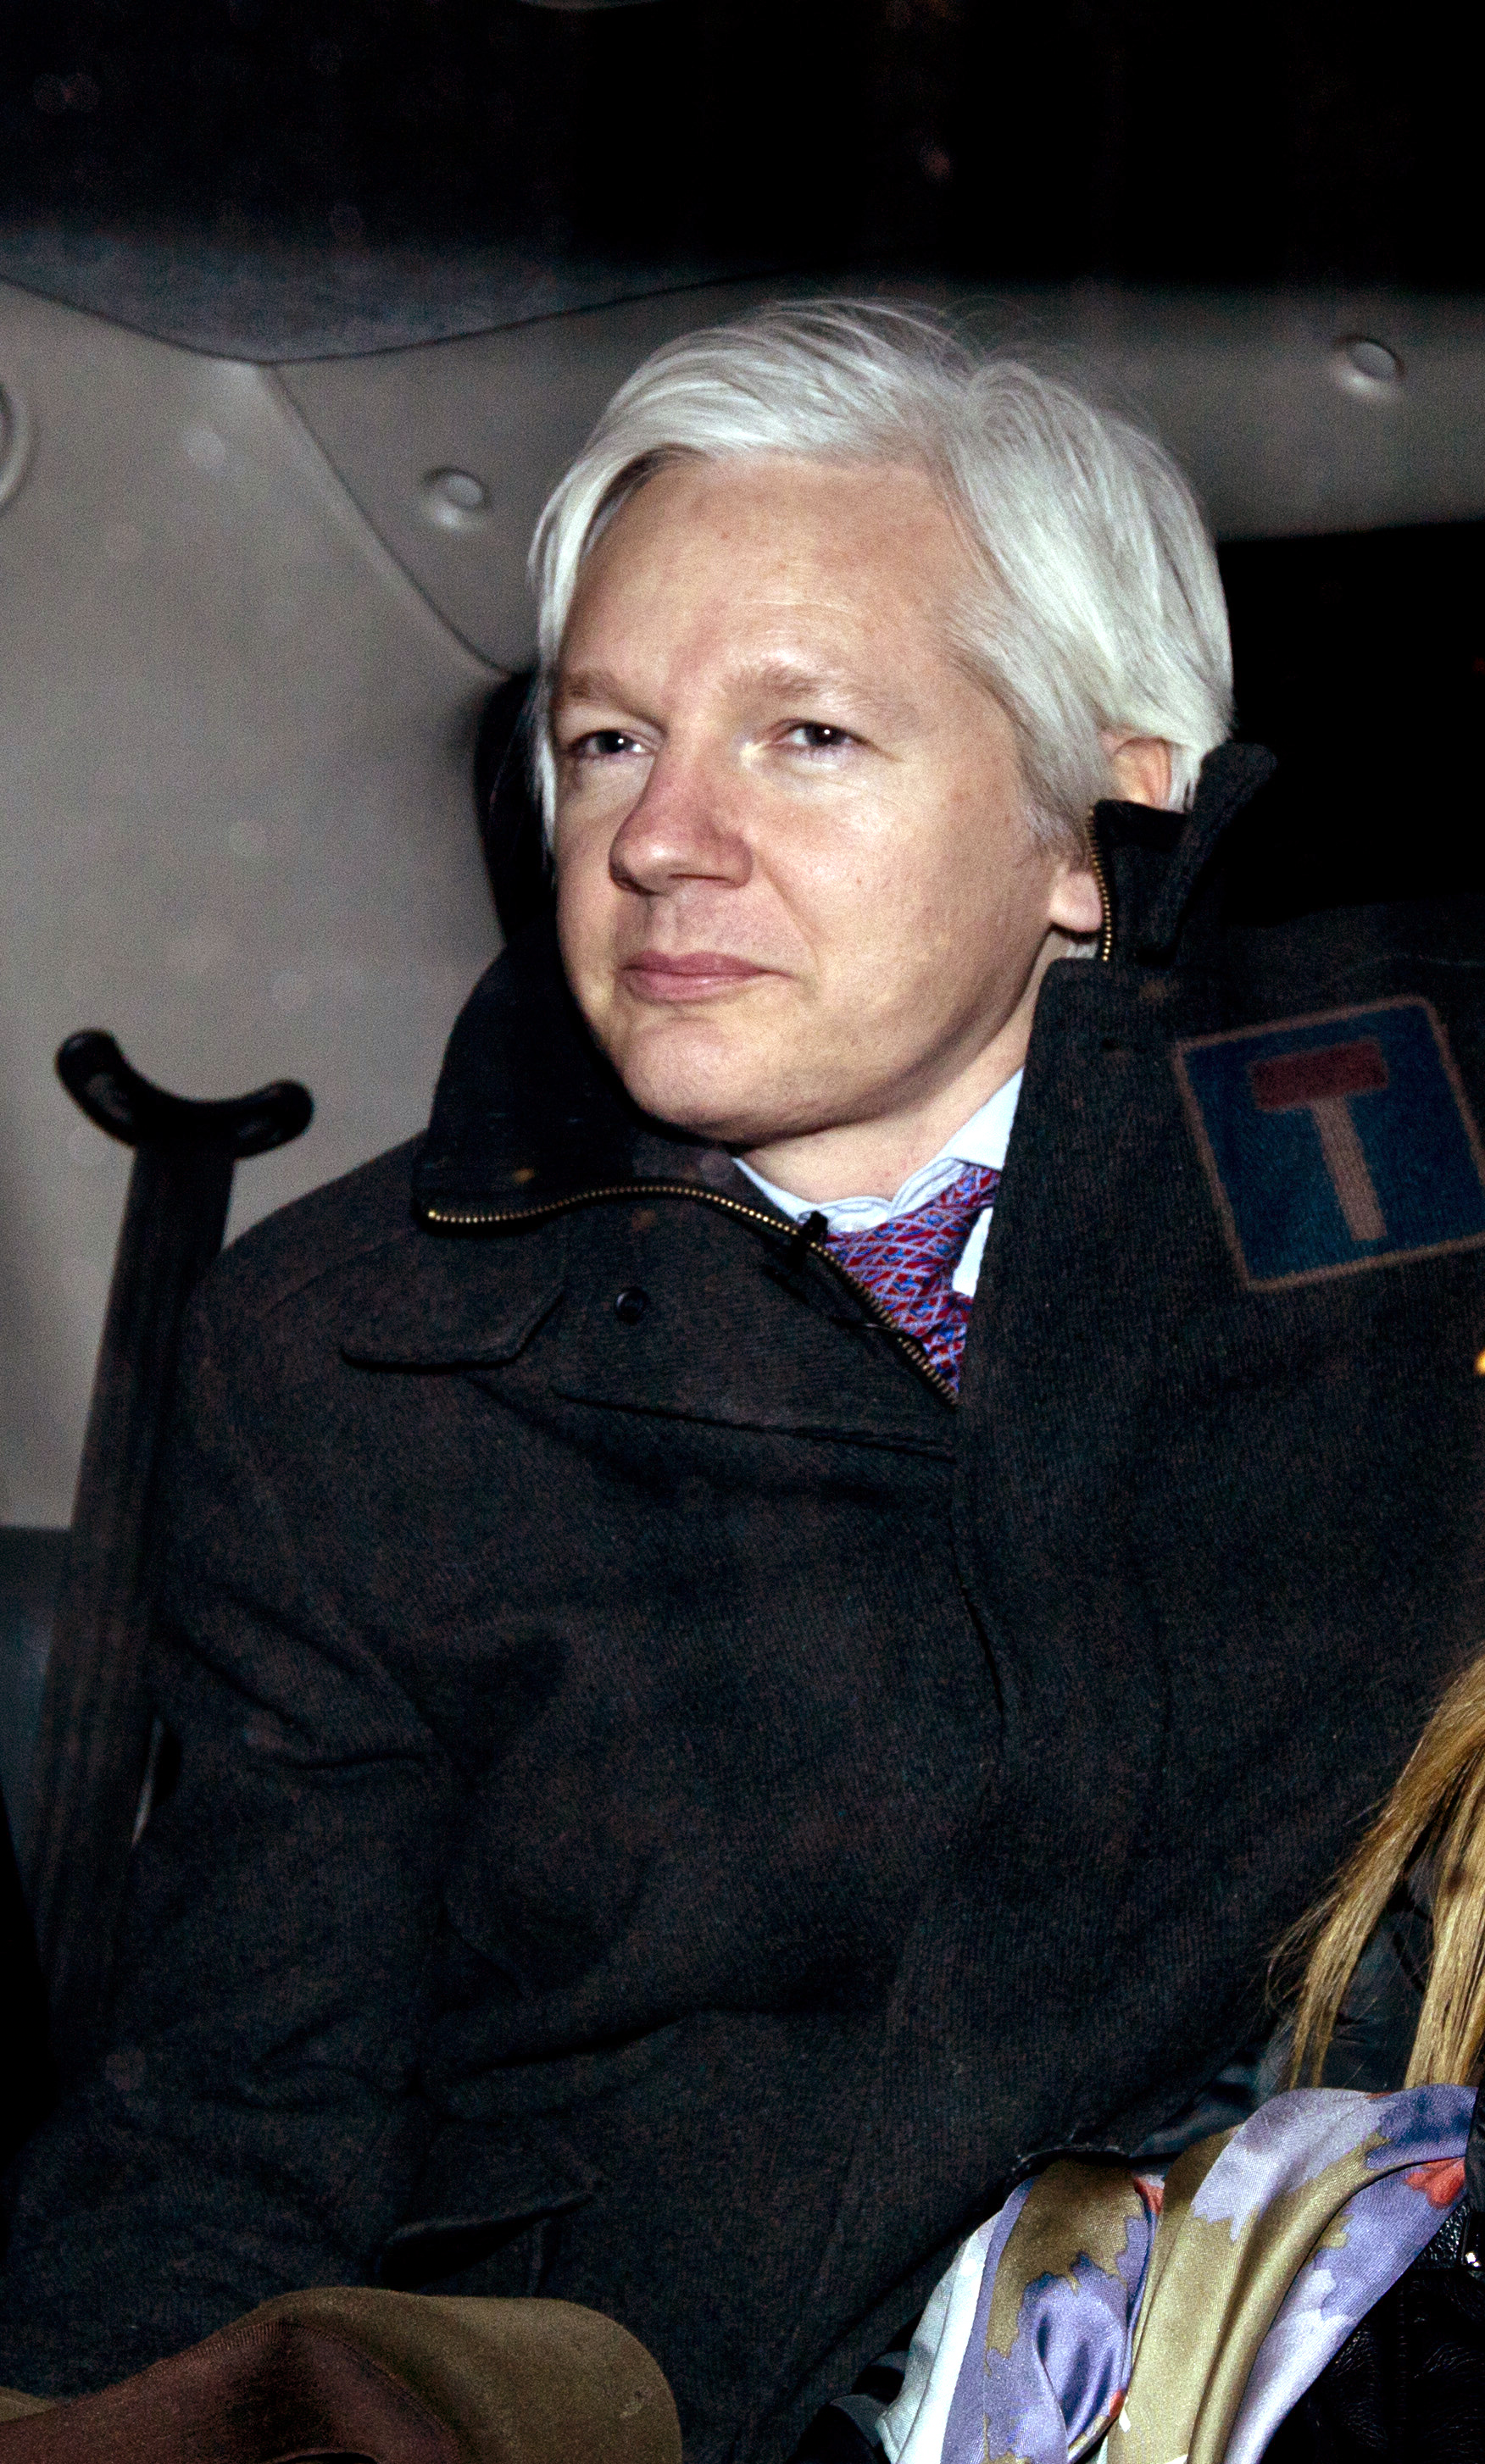 Våldtäktsanklagelserna skakade Wikileaks.